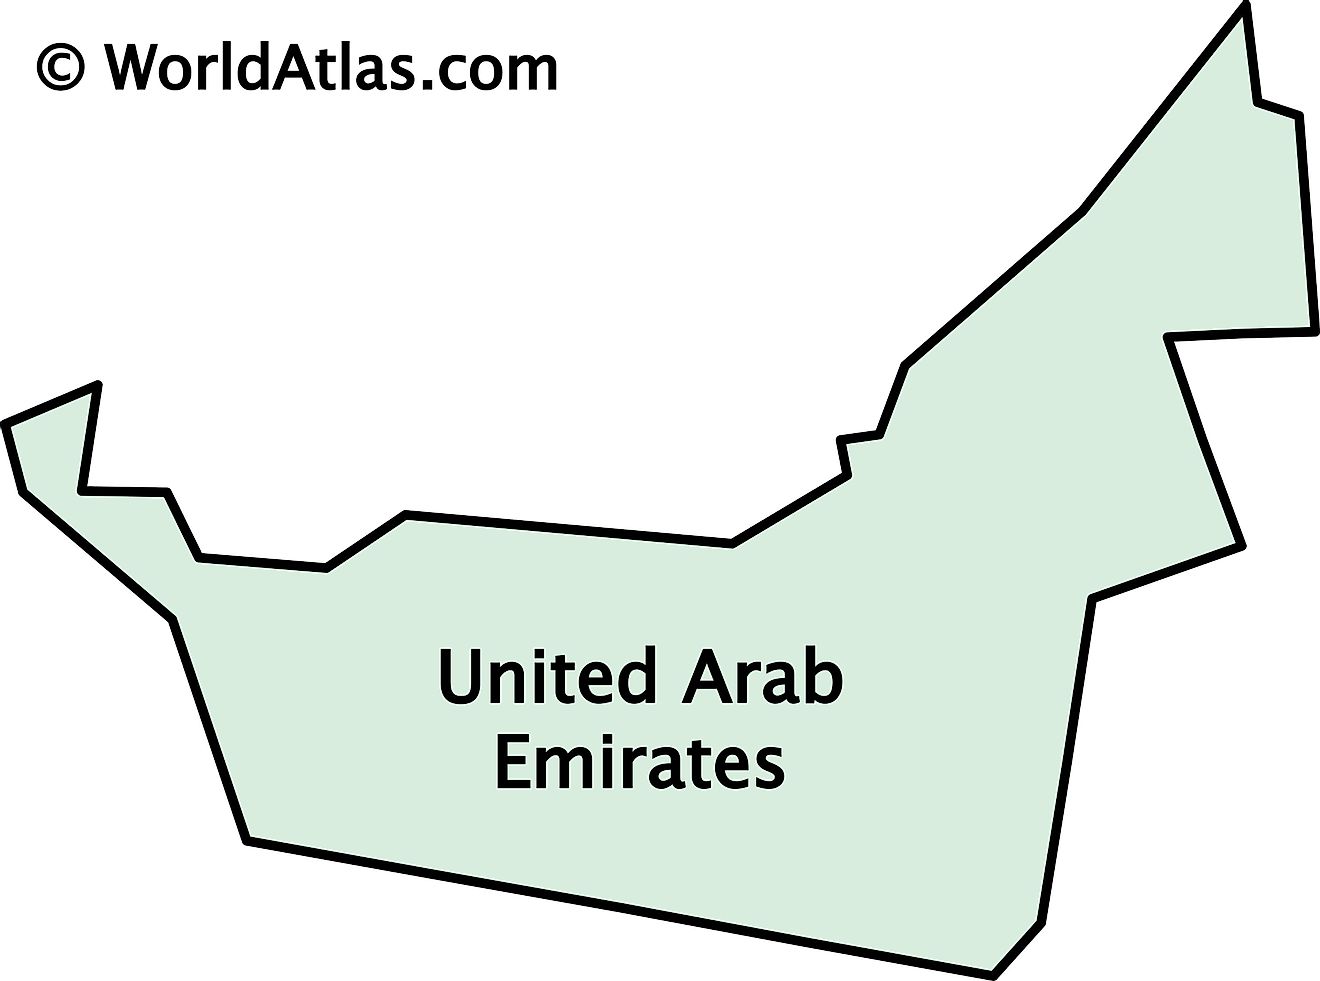 Mapa de contorno de los Emiratos Árabes Unidos (EAU)